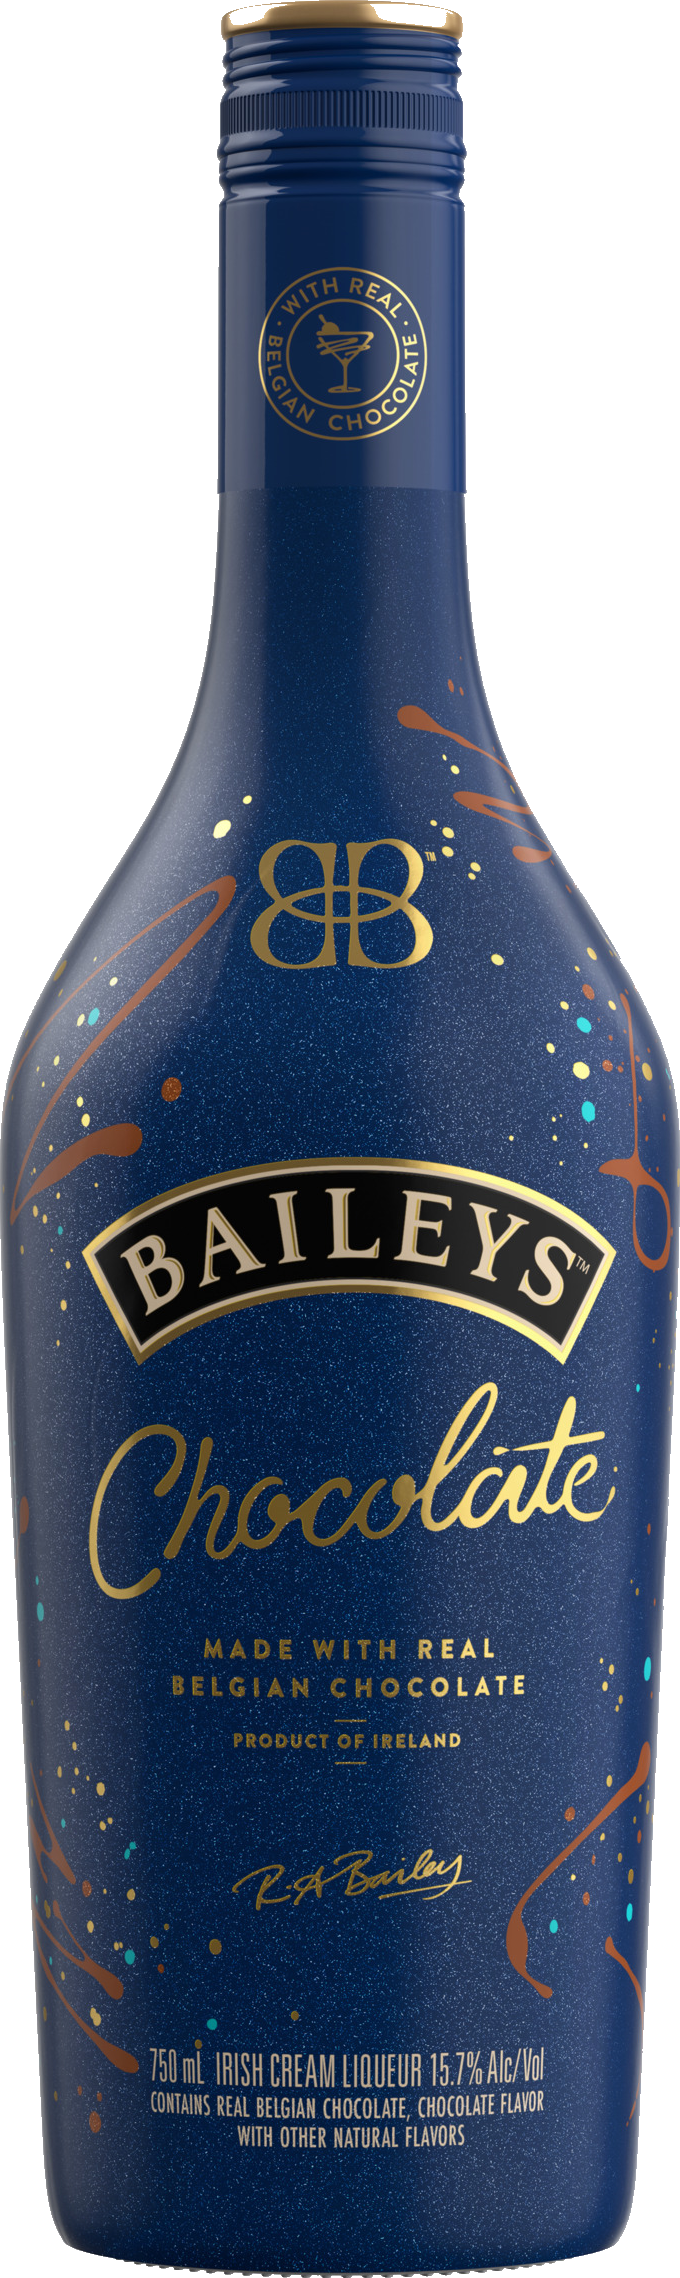 Baileys Chocolate Irish Cream Liqueur - BottleBuys